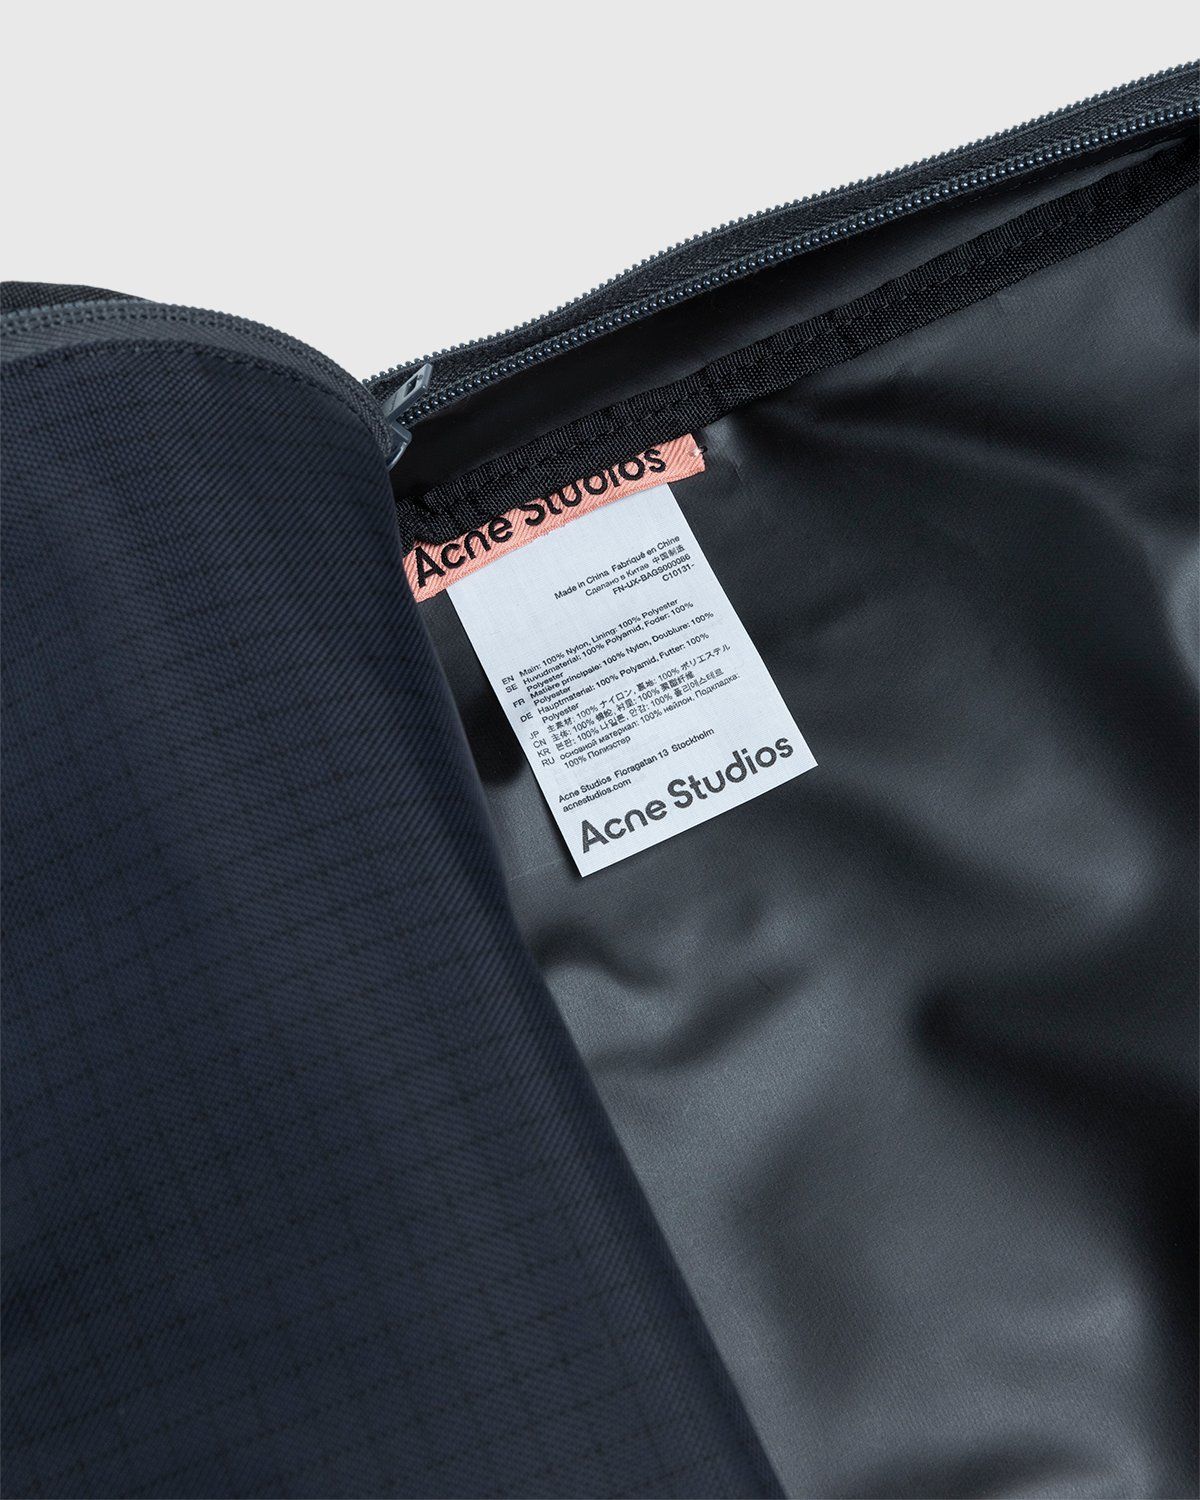 Acne Studios – Nylon Crossbody Laptop Bag Black/Khaki Green - Bags - Black - Image 6